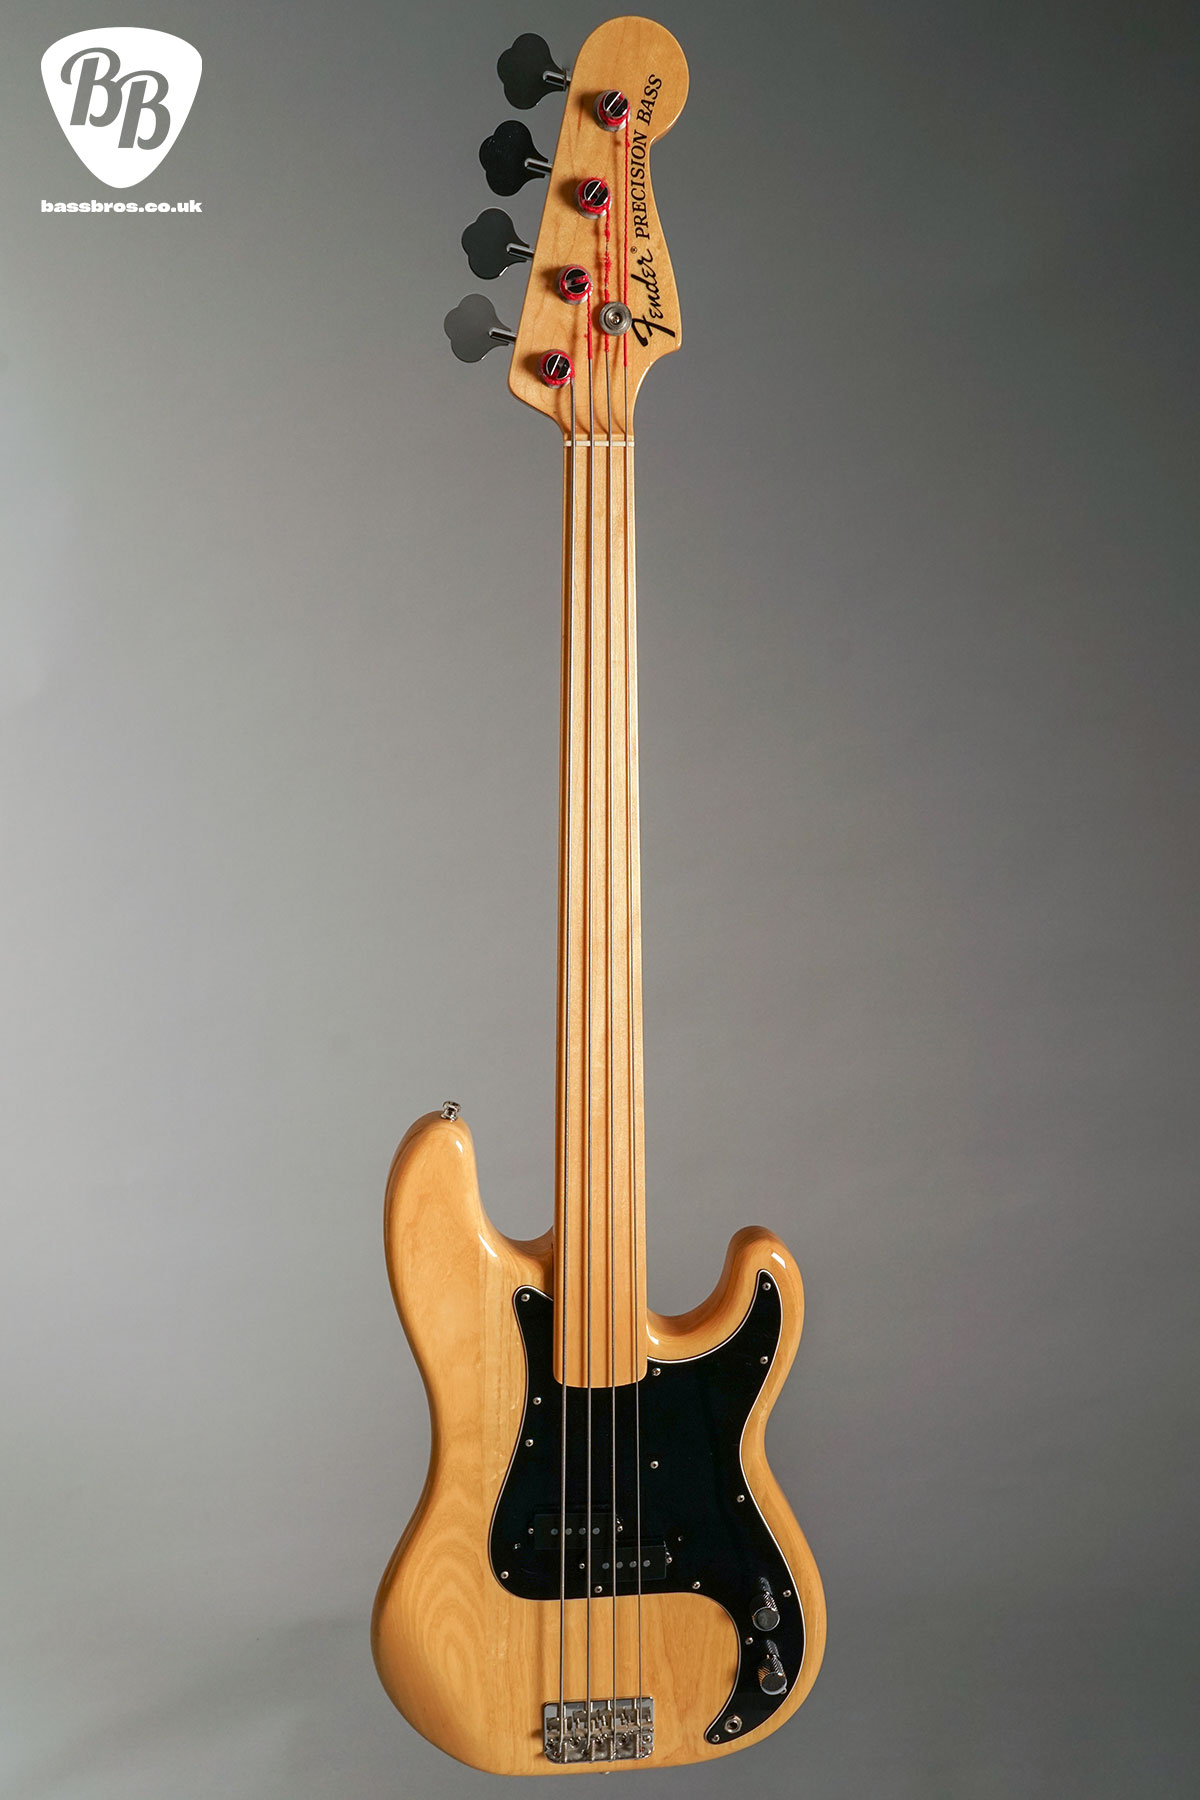 Fender Japan PB-70 Precision Bass Fretless Reissue MIJ | BassBros